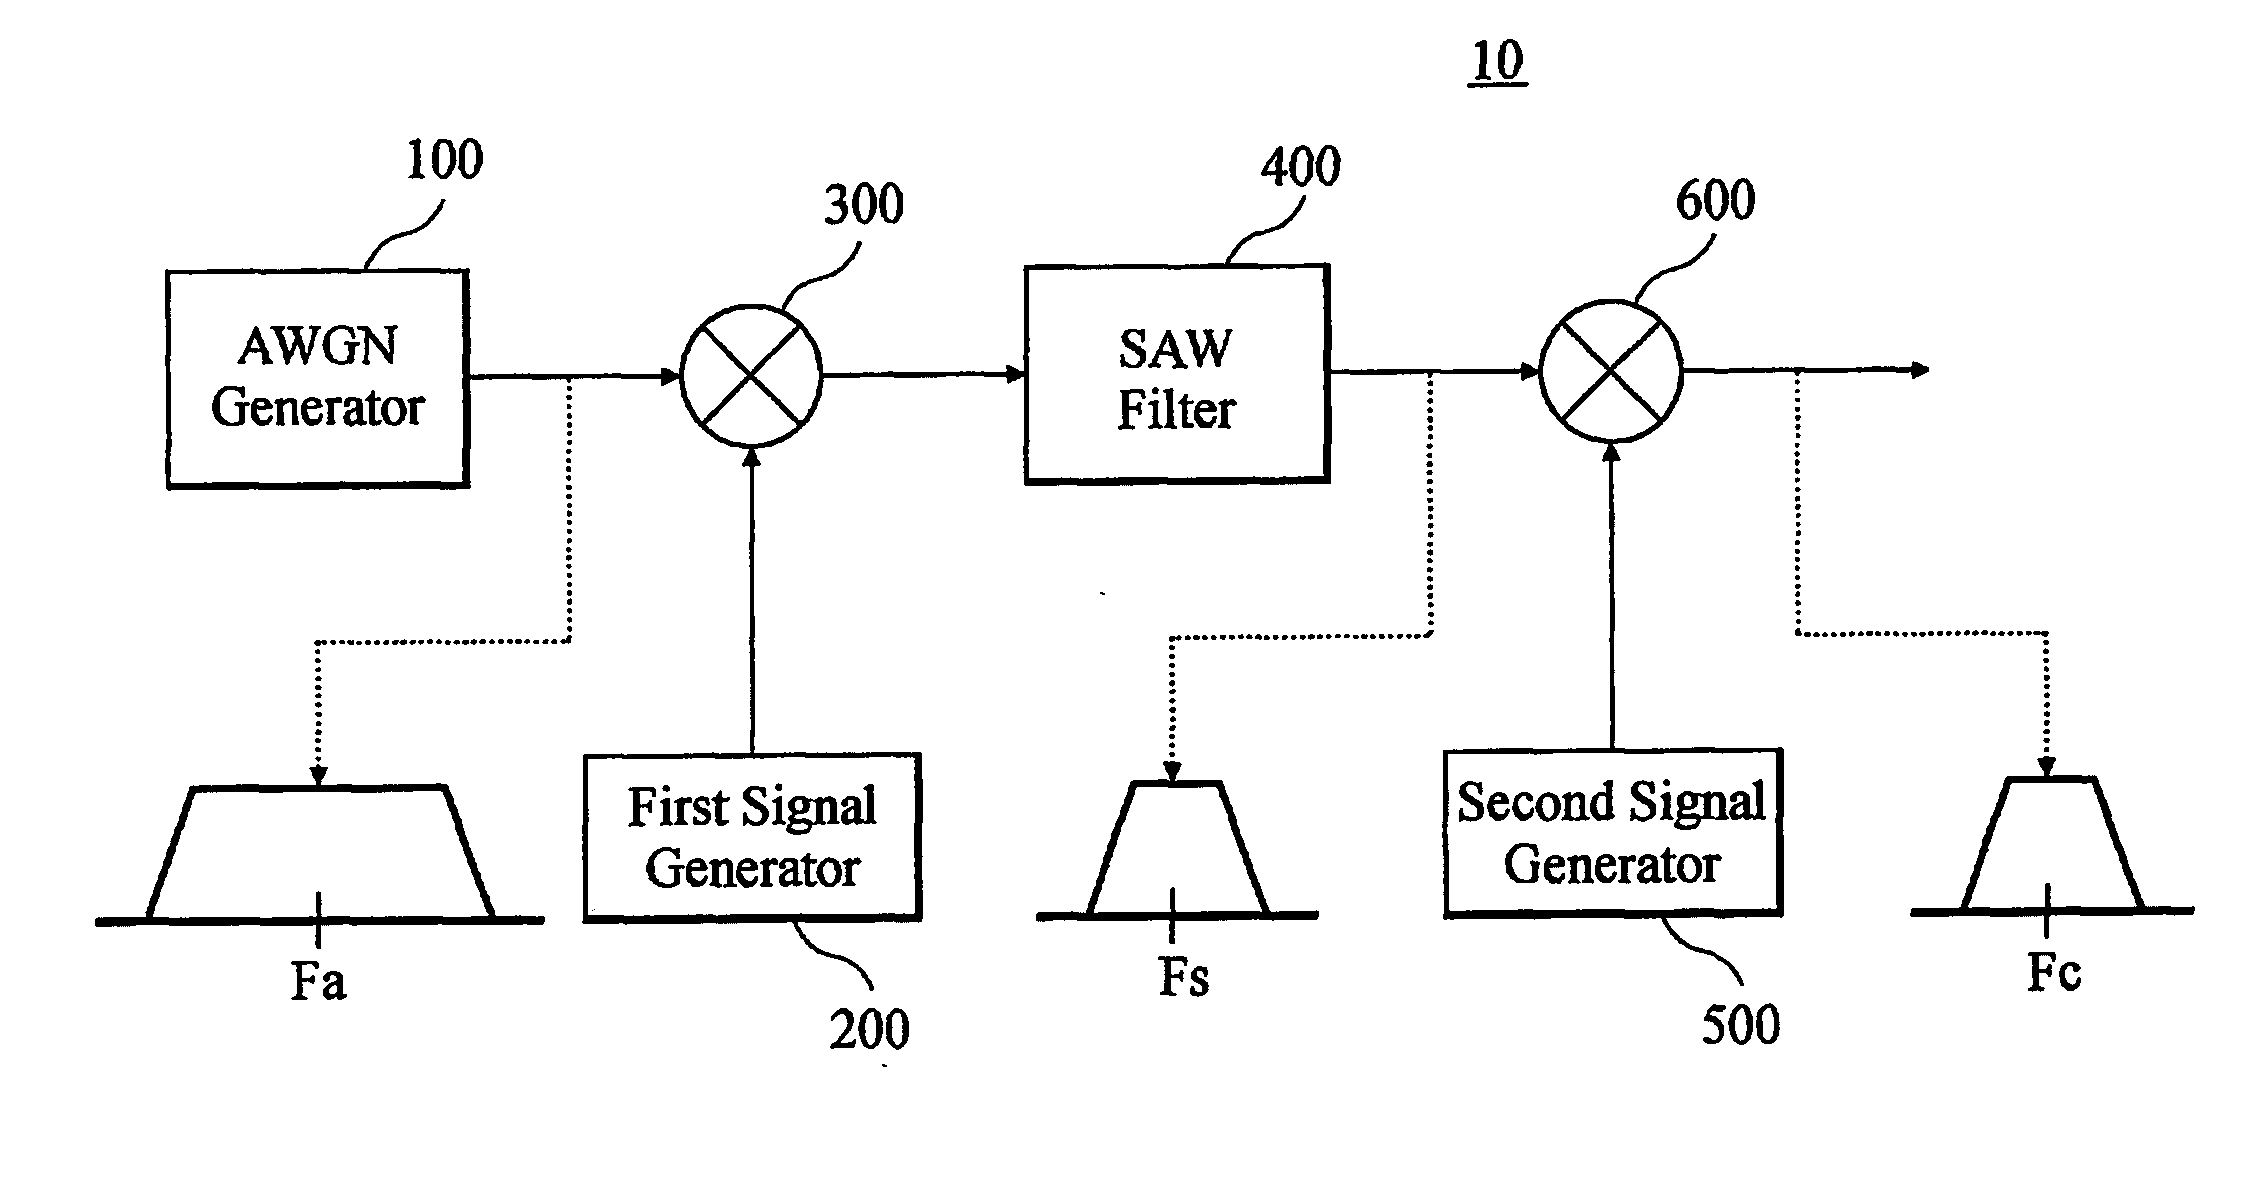 Cdma signal generator using an awgn generator and a saw filter